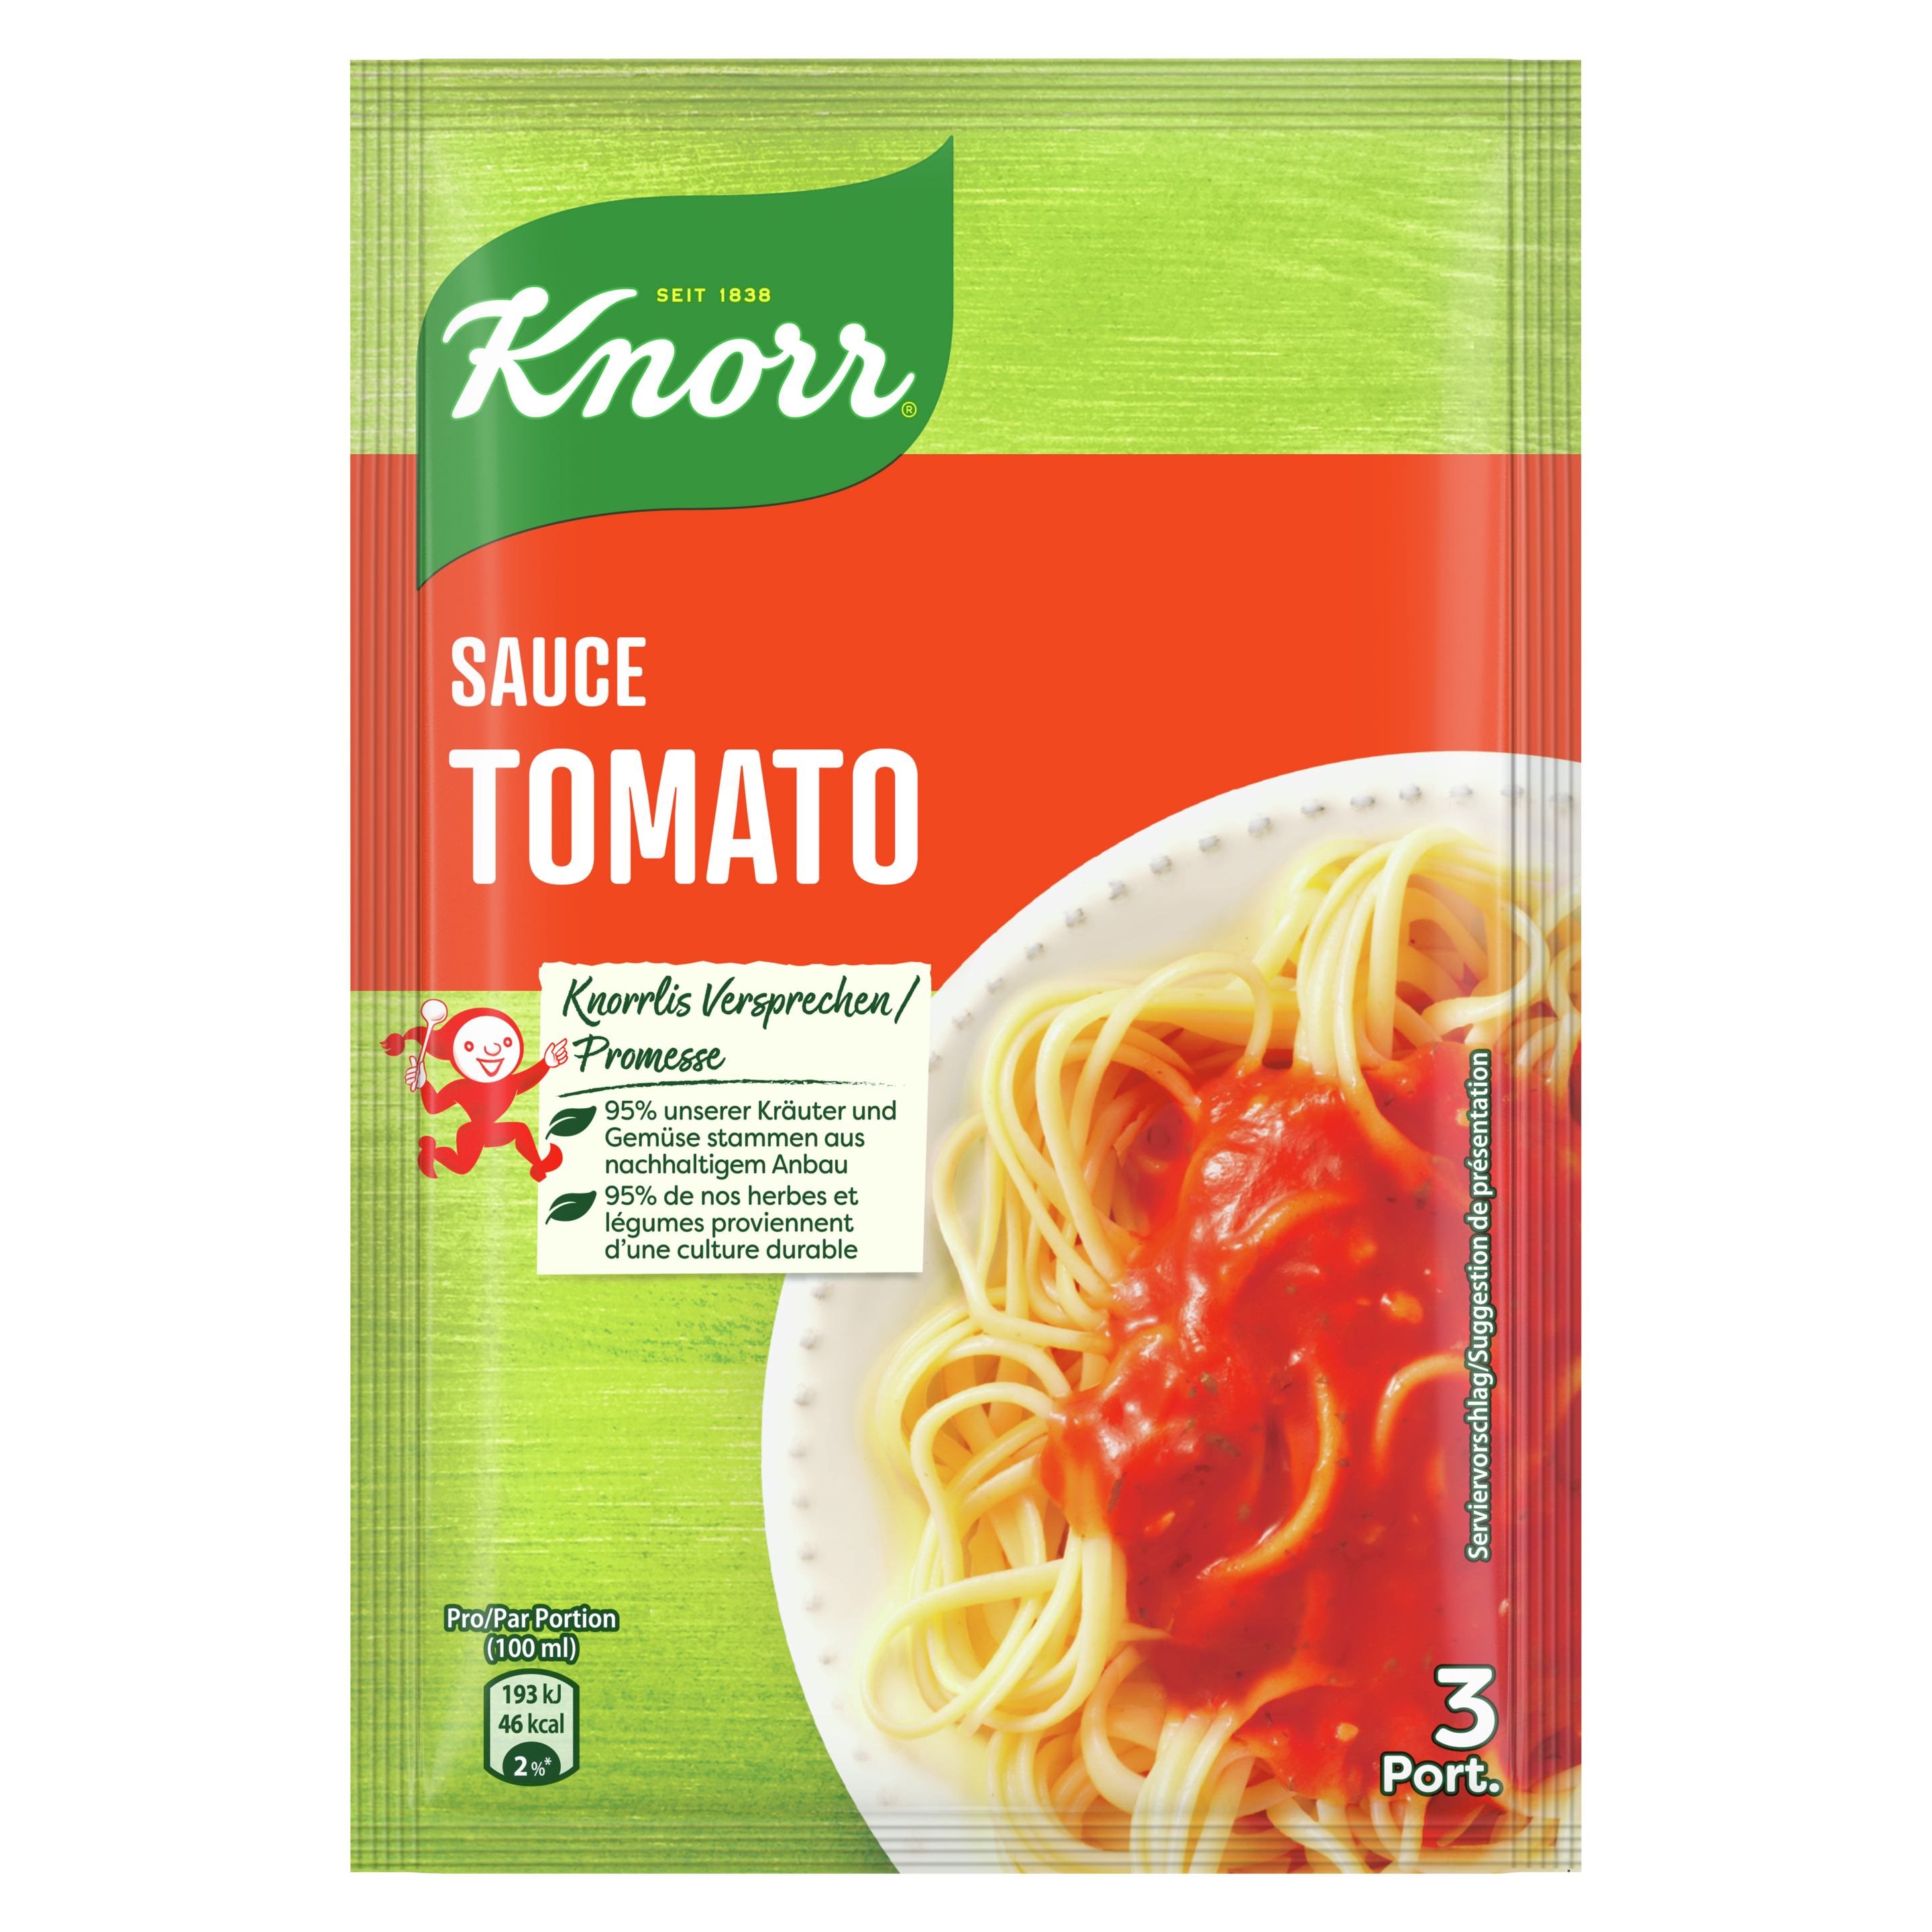 KNORR Sauce tomato sachet 3 portions